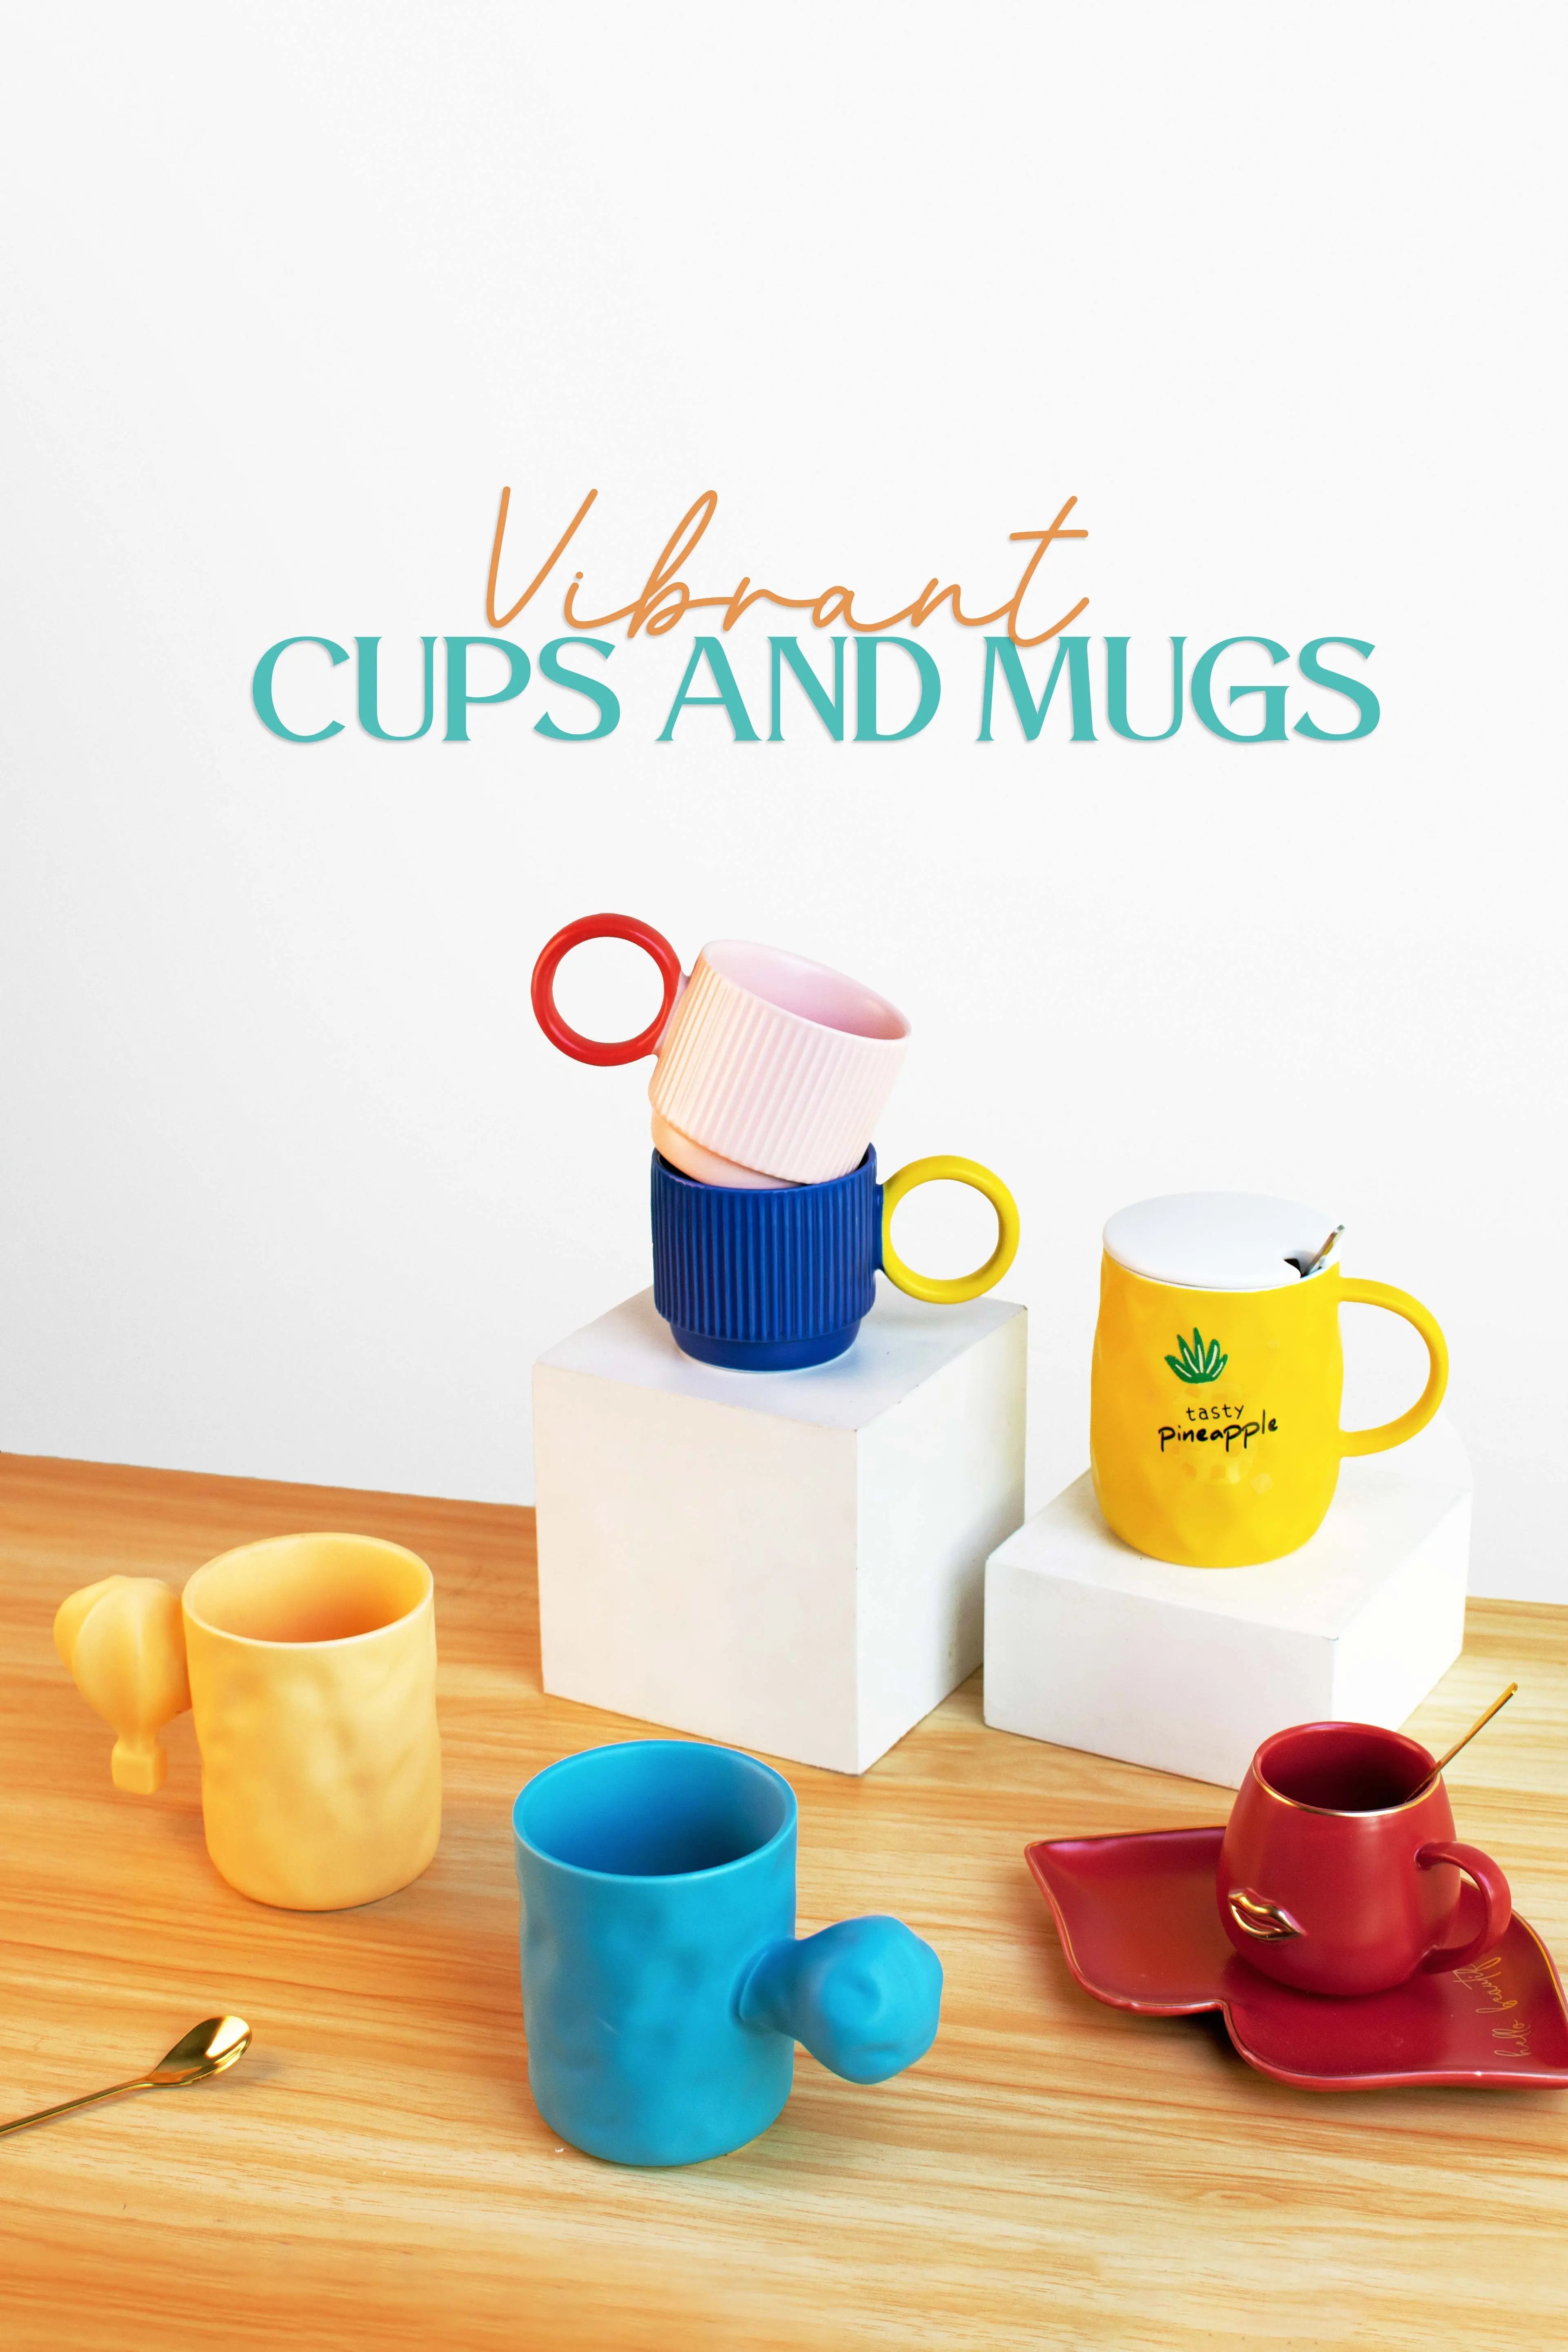 Set of 4 Vintage Aqua and White Milk Glass Coffee Mugs Vintage Aqua Mug Set  Unbranded Milk Glass Vintage Coffee Mug Set Retro Mugs 